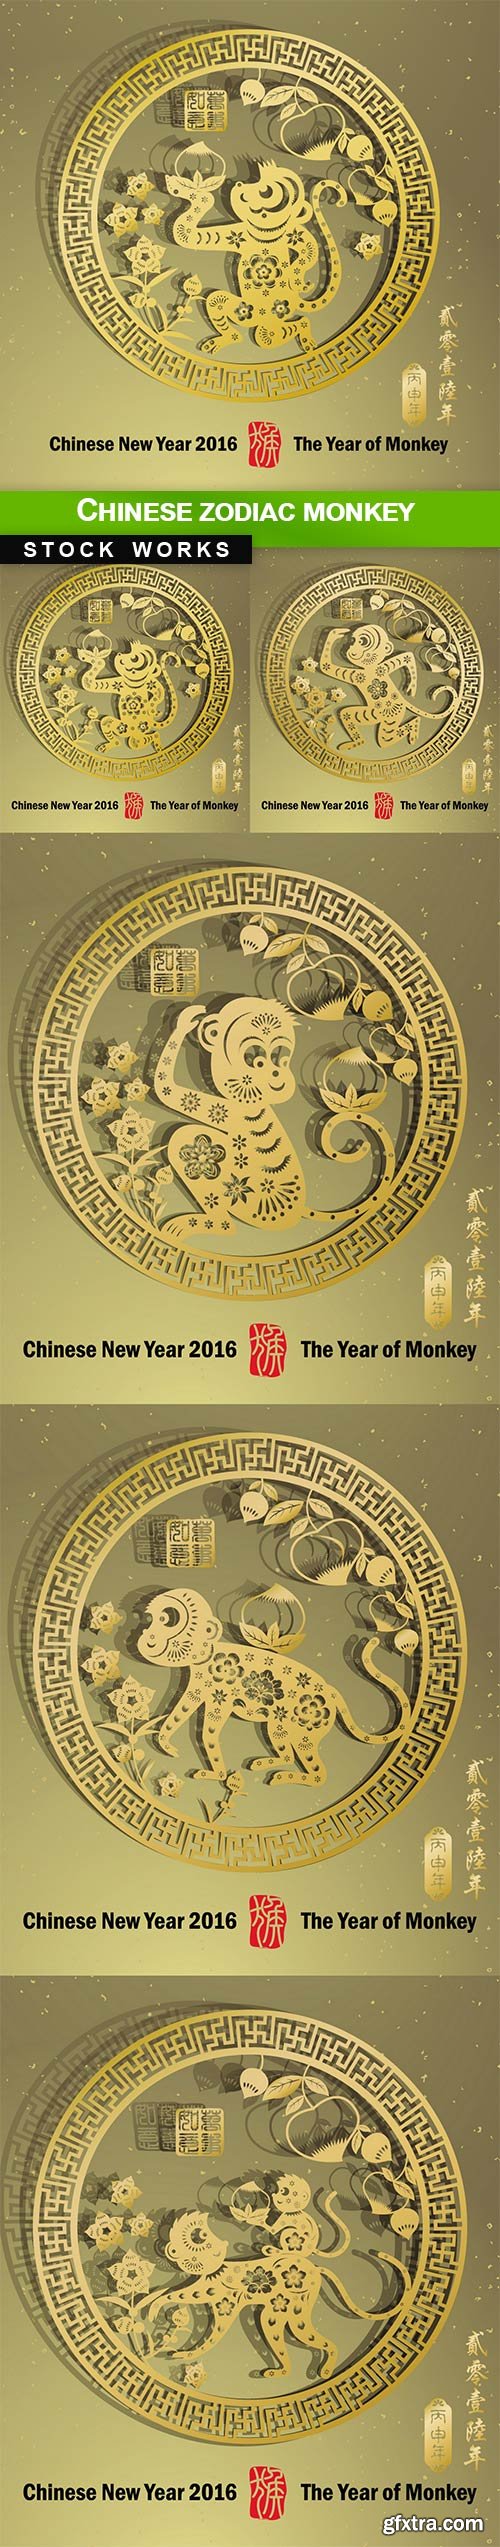 Chinese zodiac monkey - 5 EPS